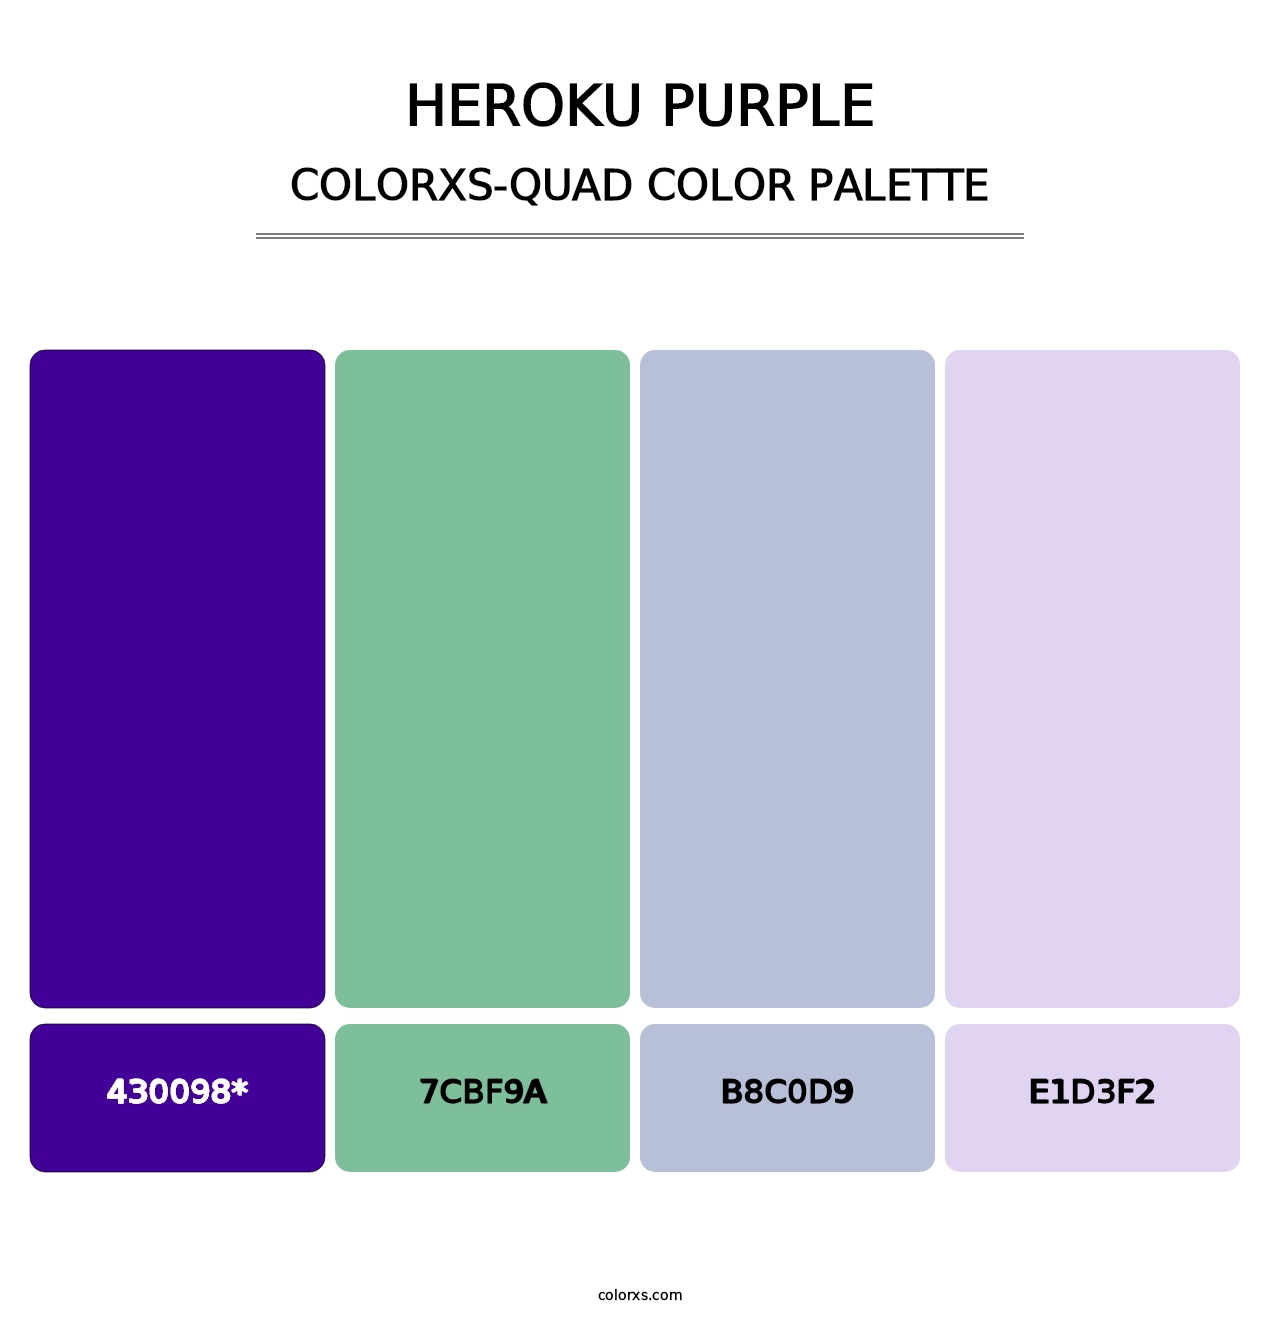 Heroku Purple - Colorxs Quad Palette